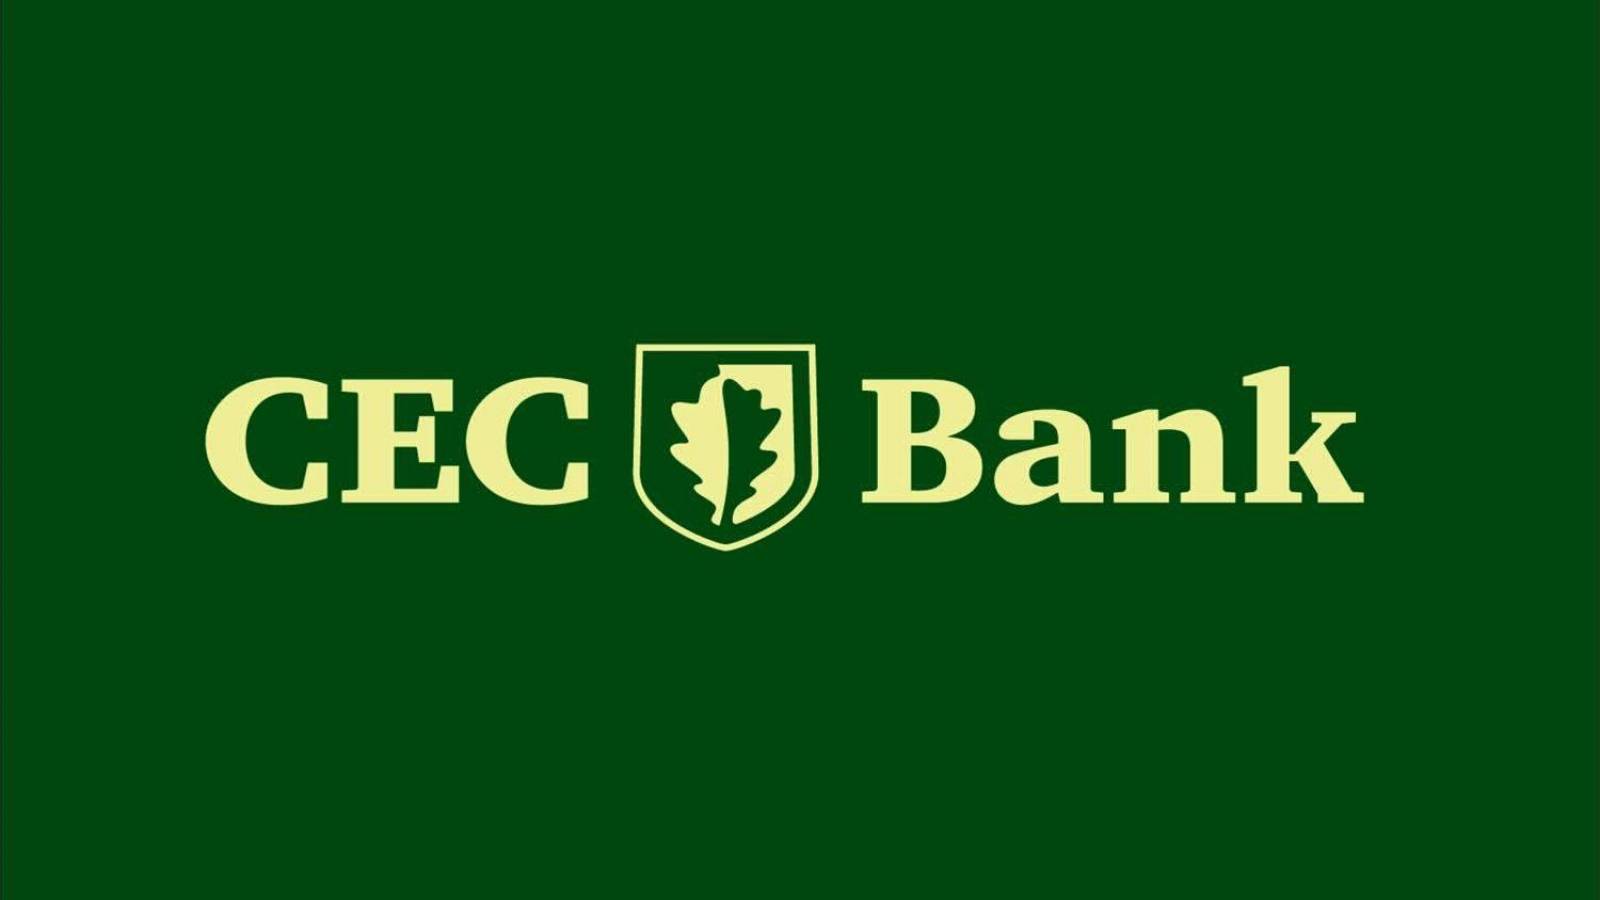 CEC Pankin liitteet